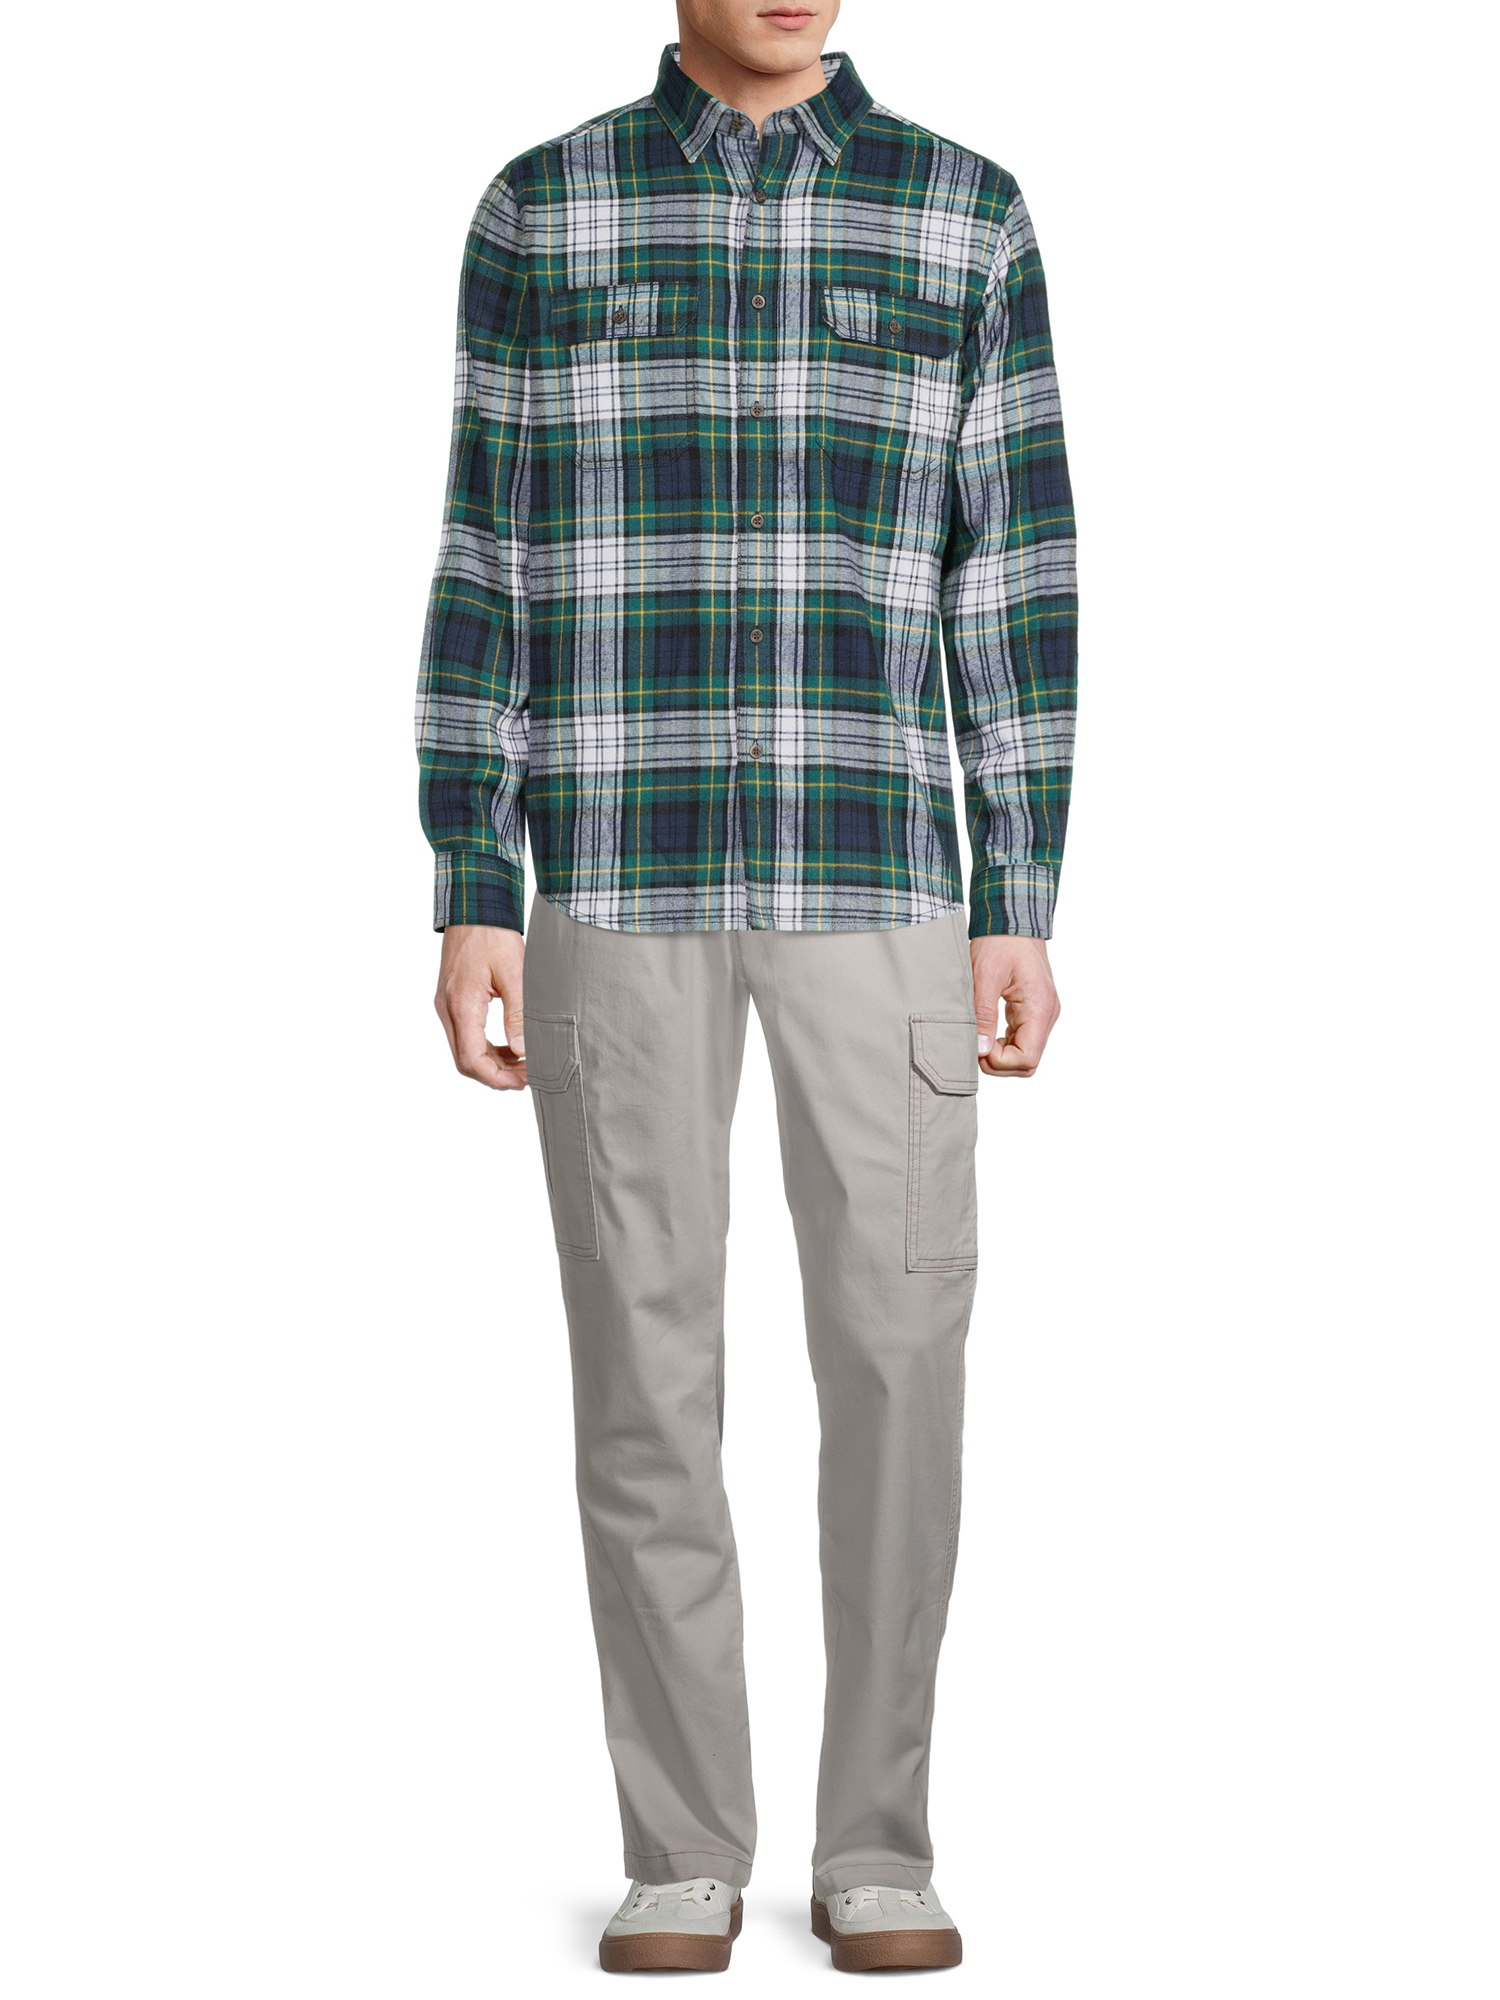 George Men's and Big Men's Super Soft Flannel Shirt, up to 5XLT - image 3 of 5